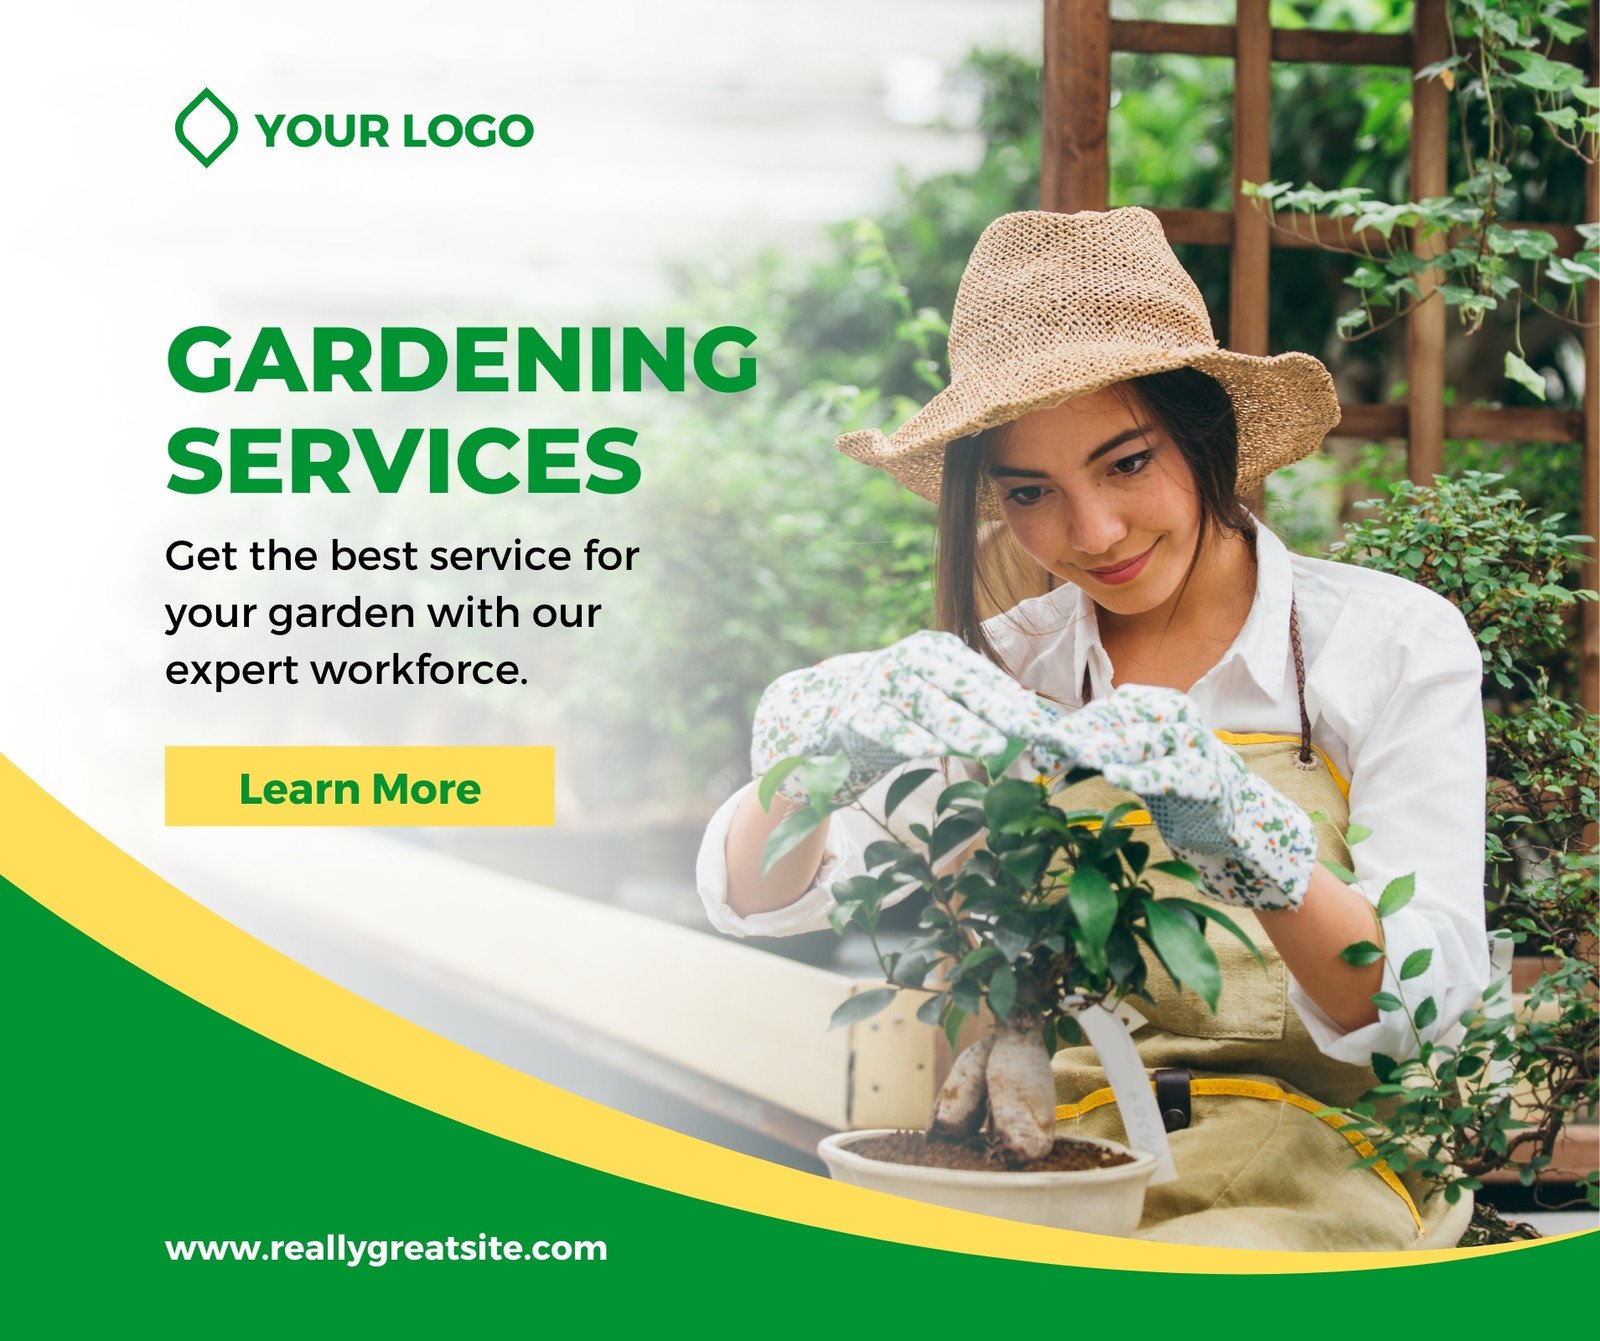 Green Modern Gardening Services Facebook Post